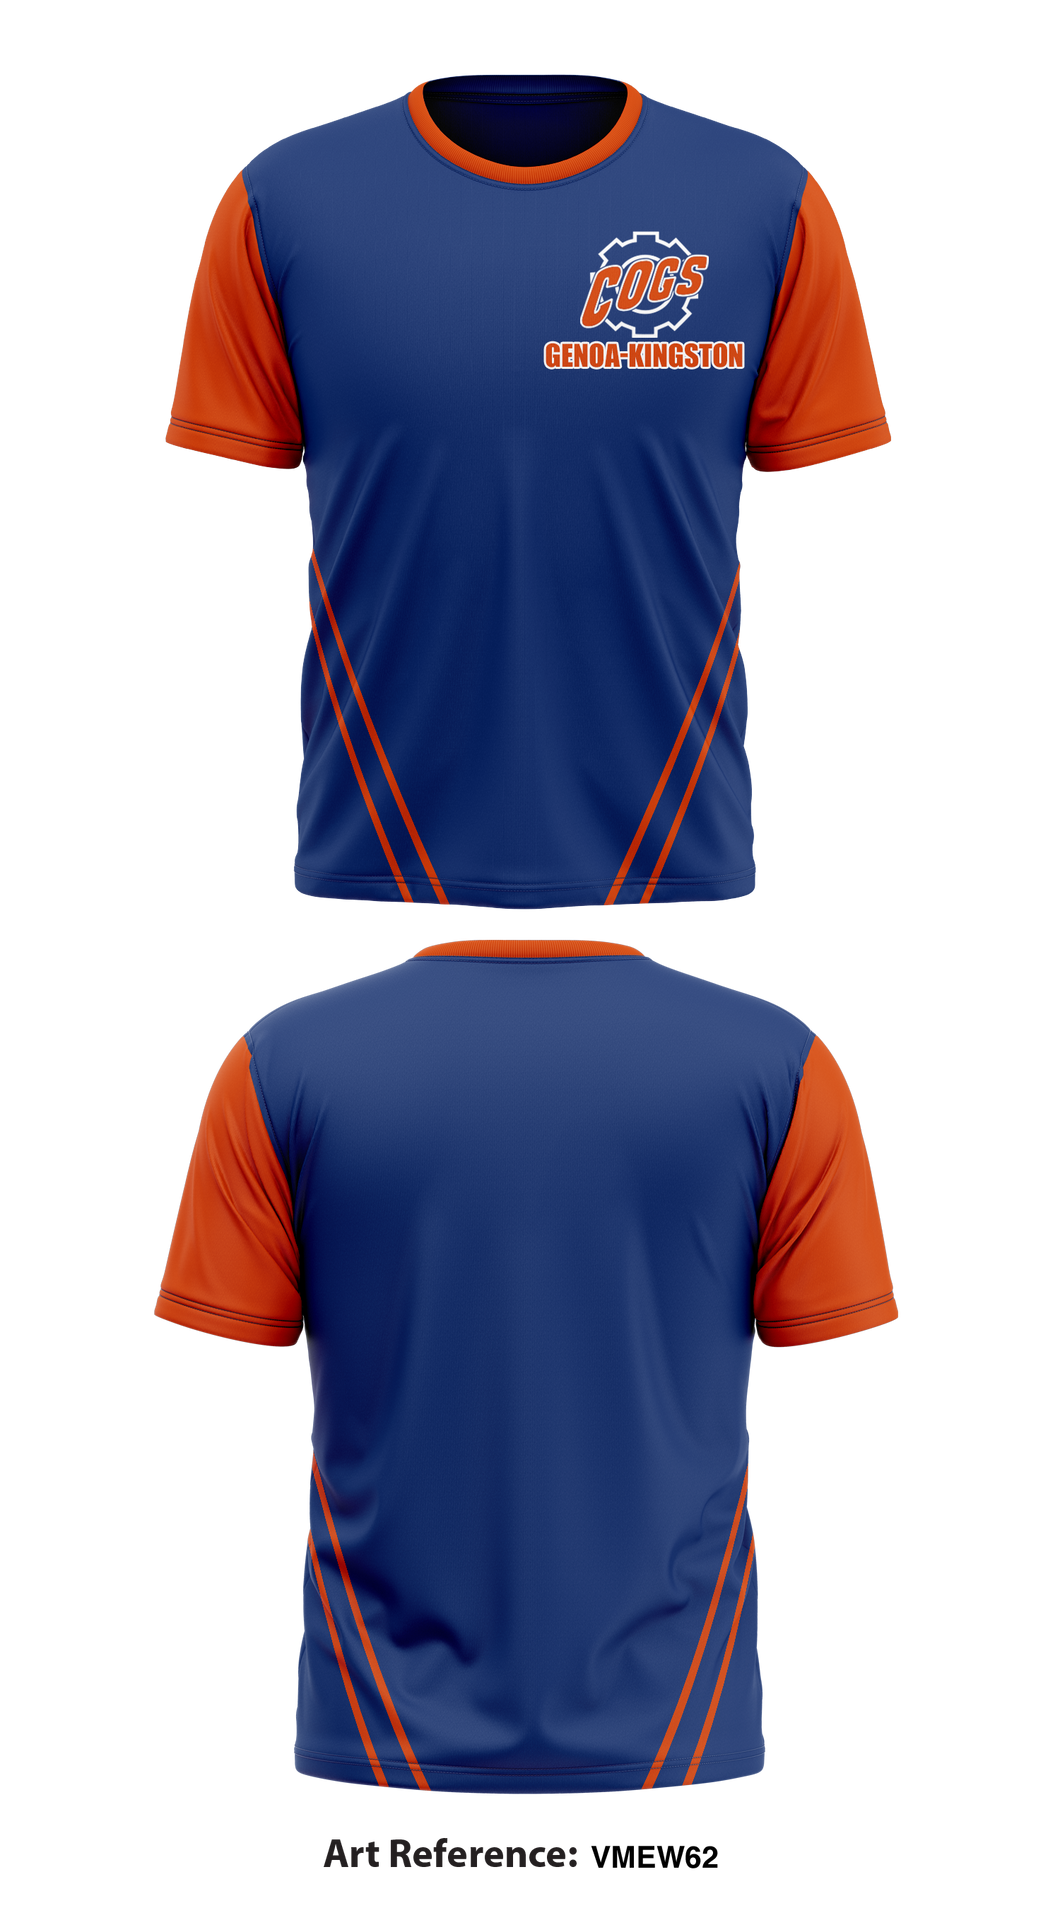 Genoa-Kingston track & field 45300590 Short Sleeve Performance Shirt - 1